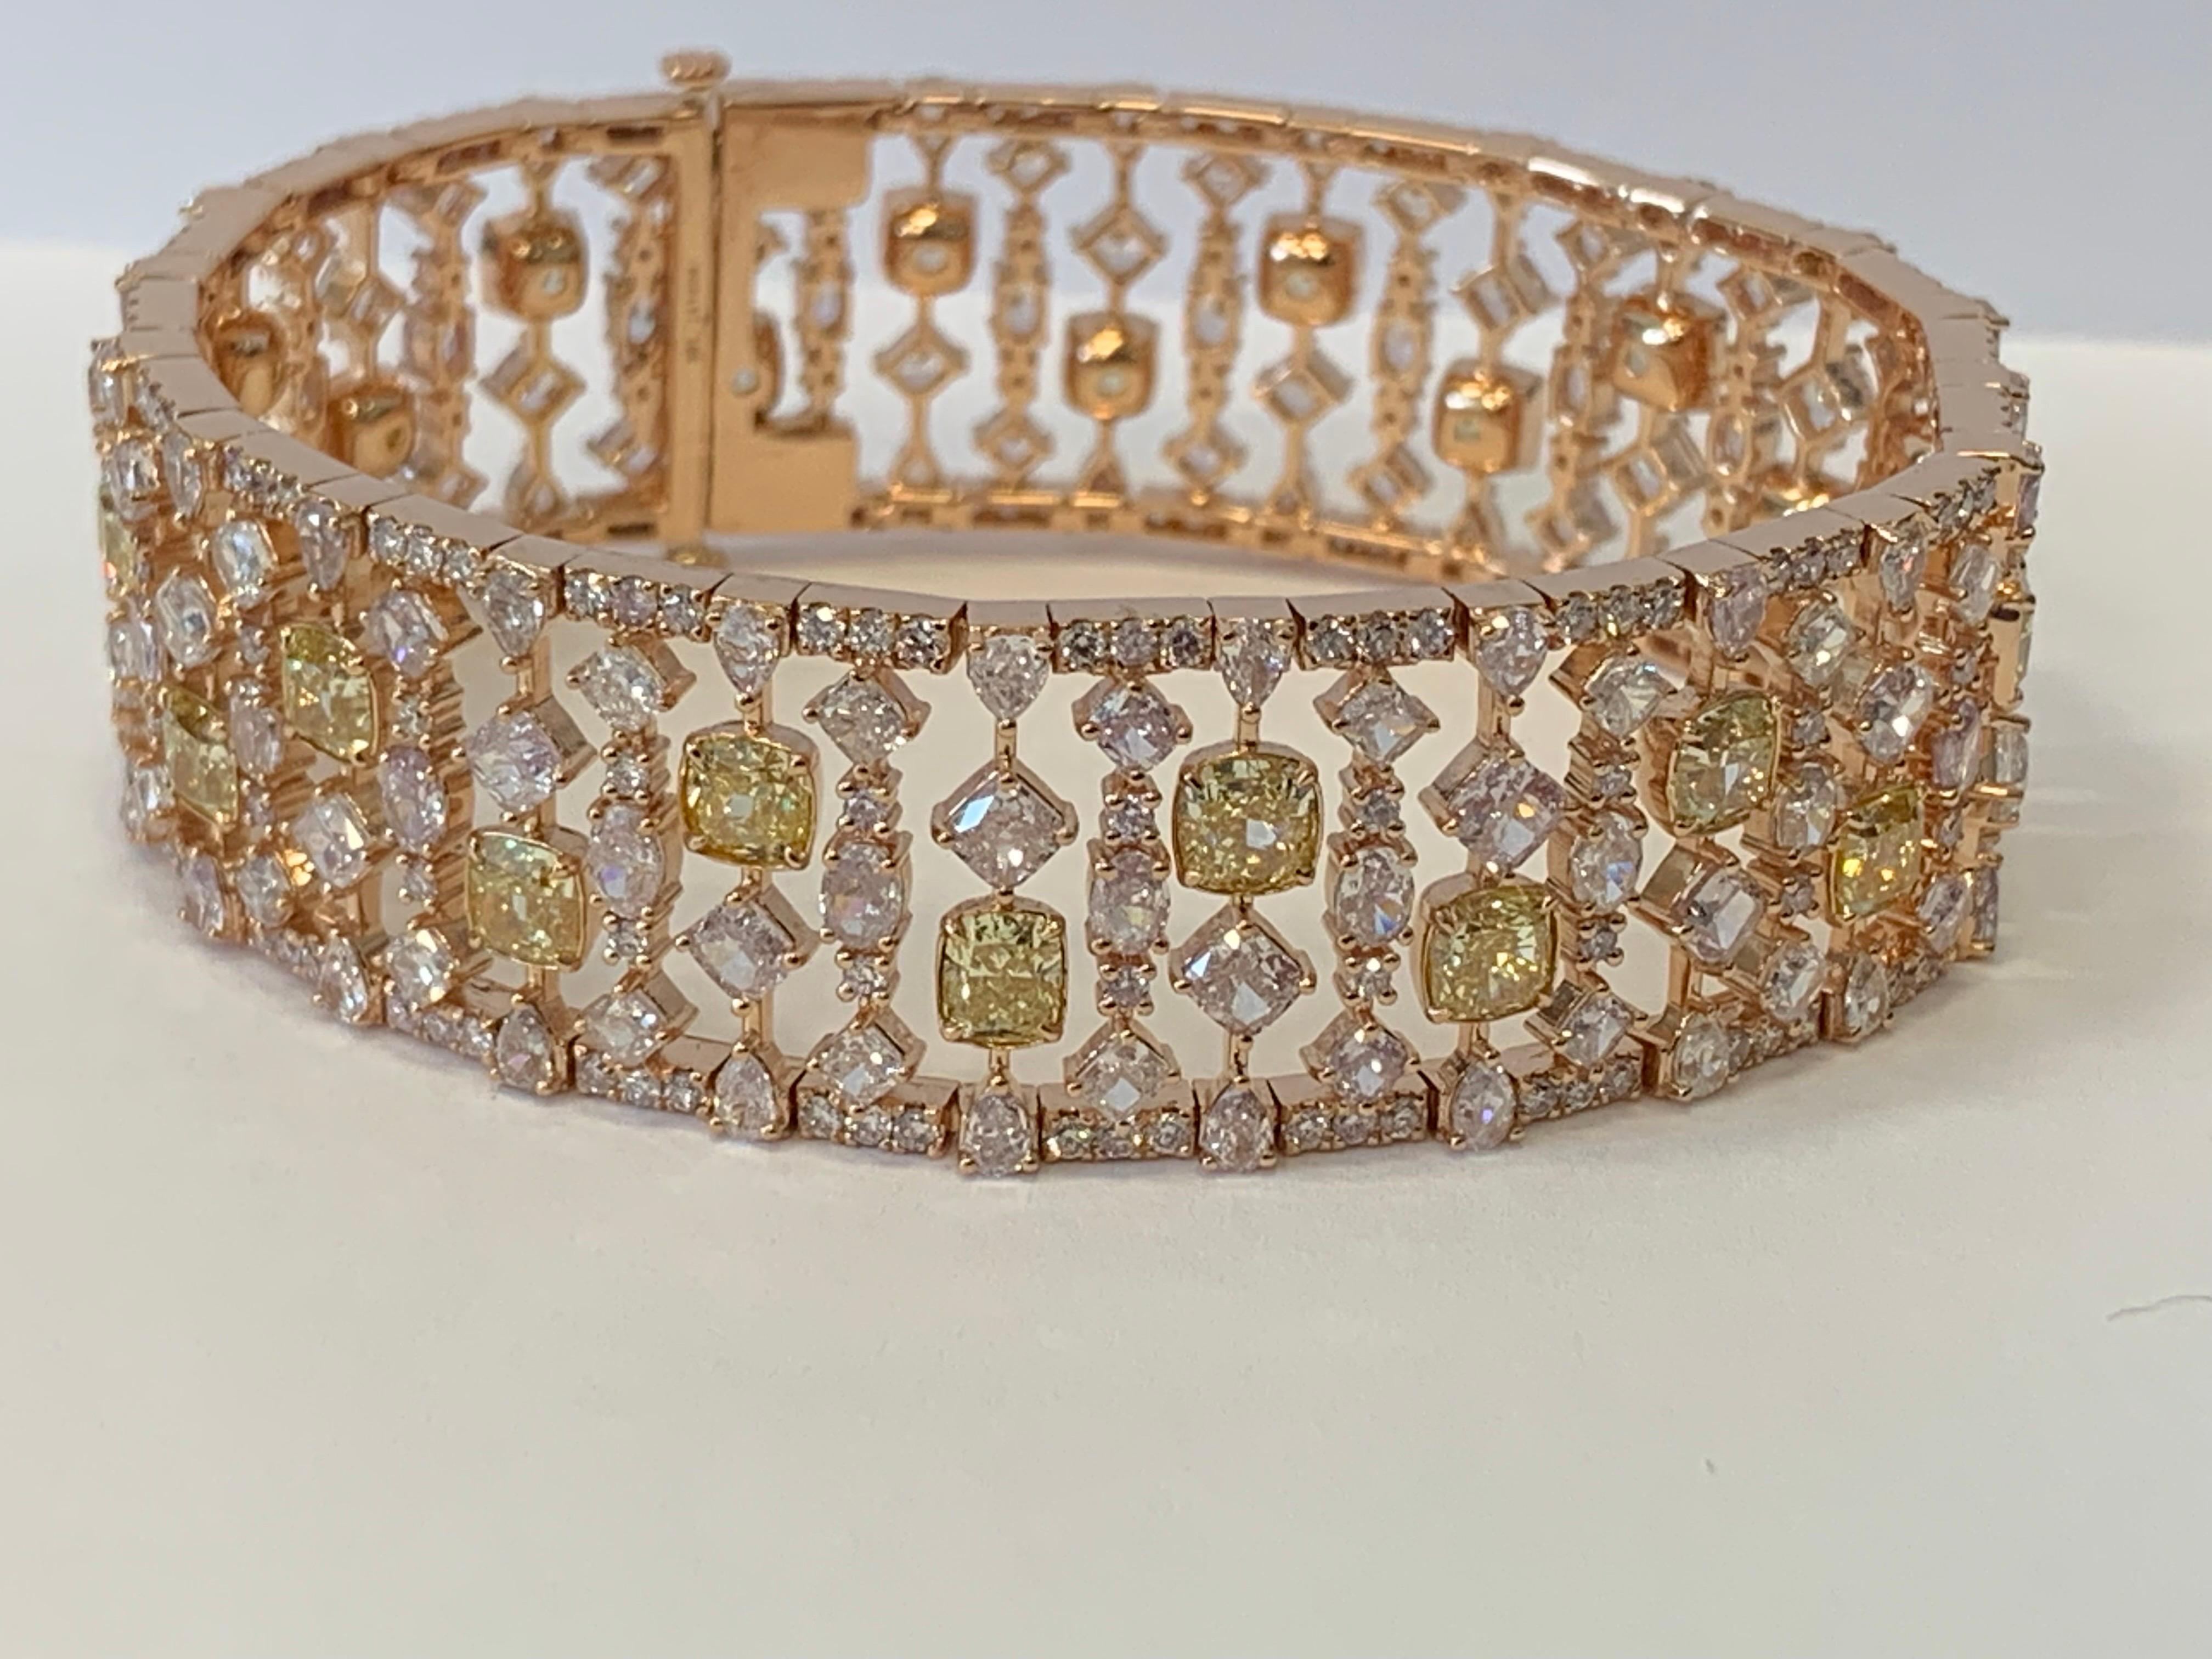 Cushion Cut Yellow and Light Diamond Bracelet Set in 18K Rose Gold